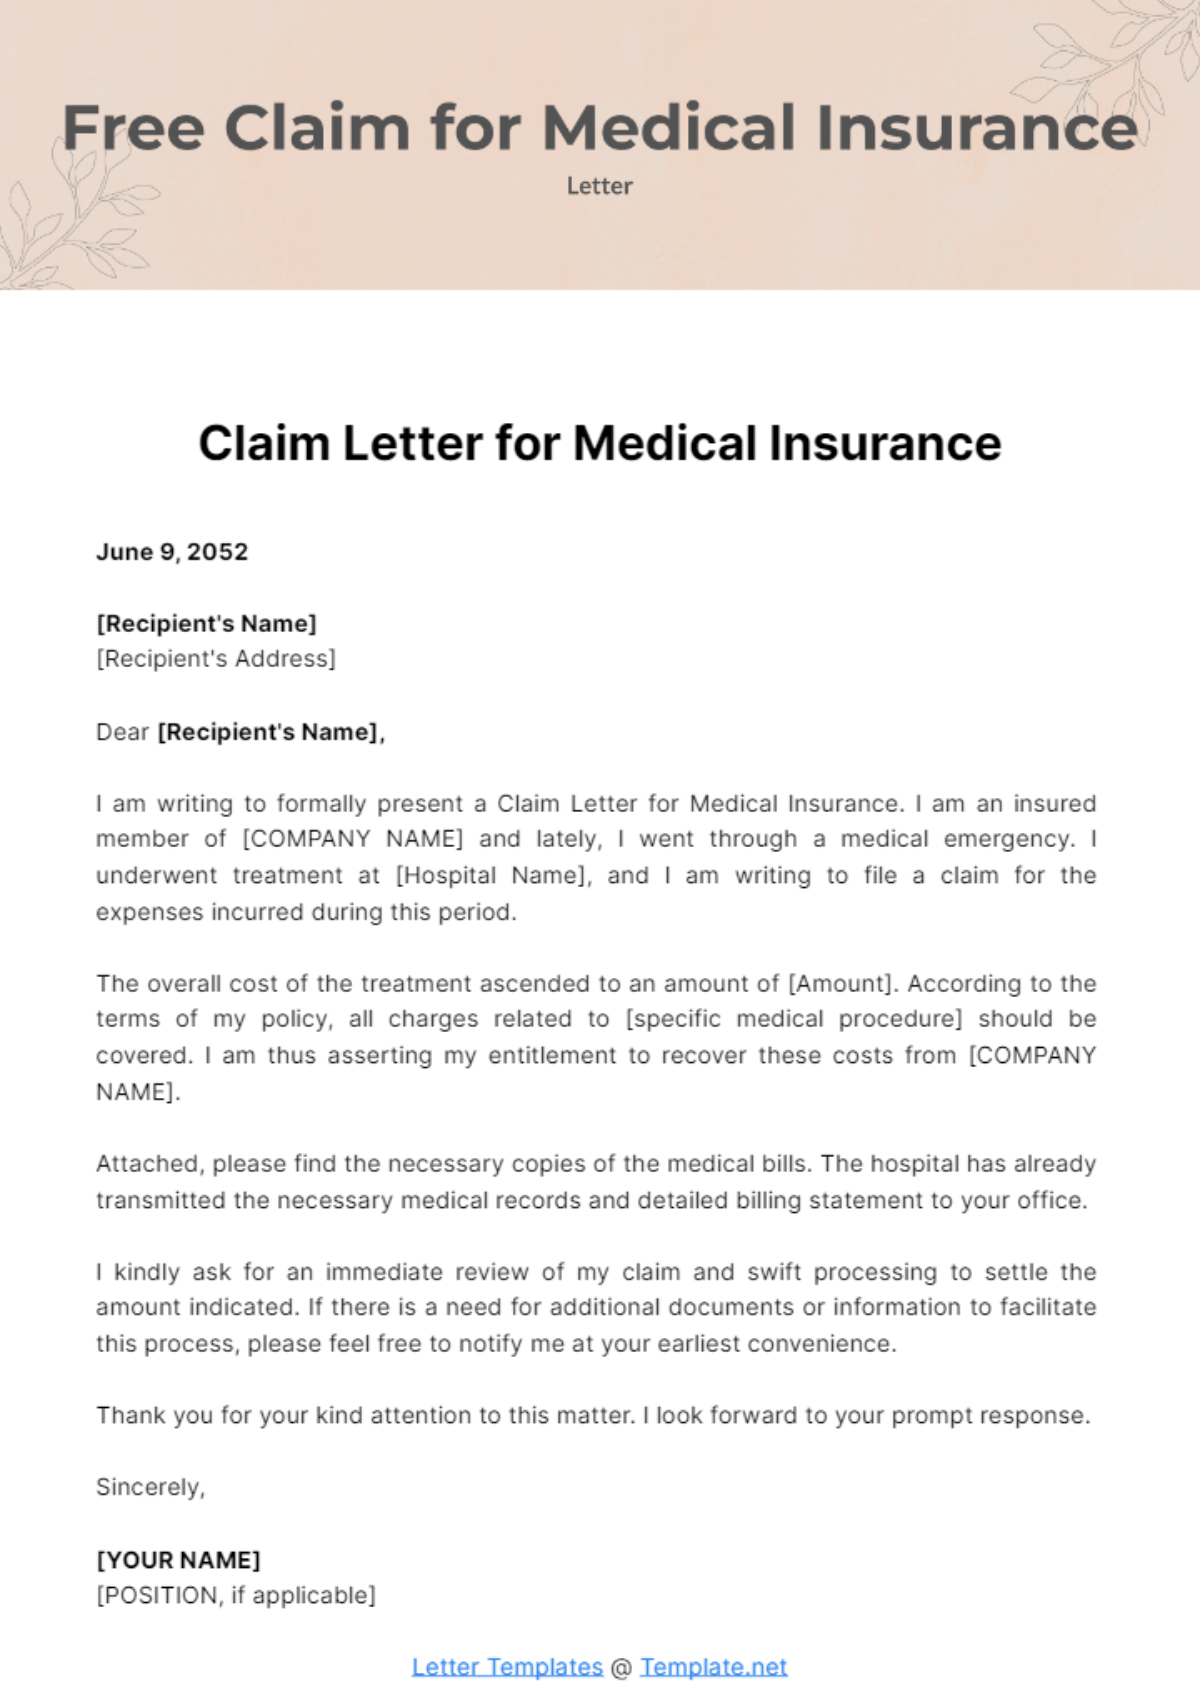 Claim Letter for Medical Insurance Template